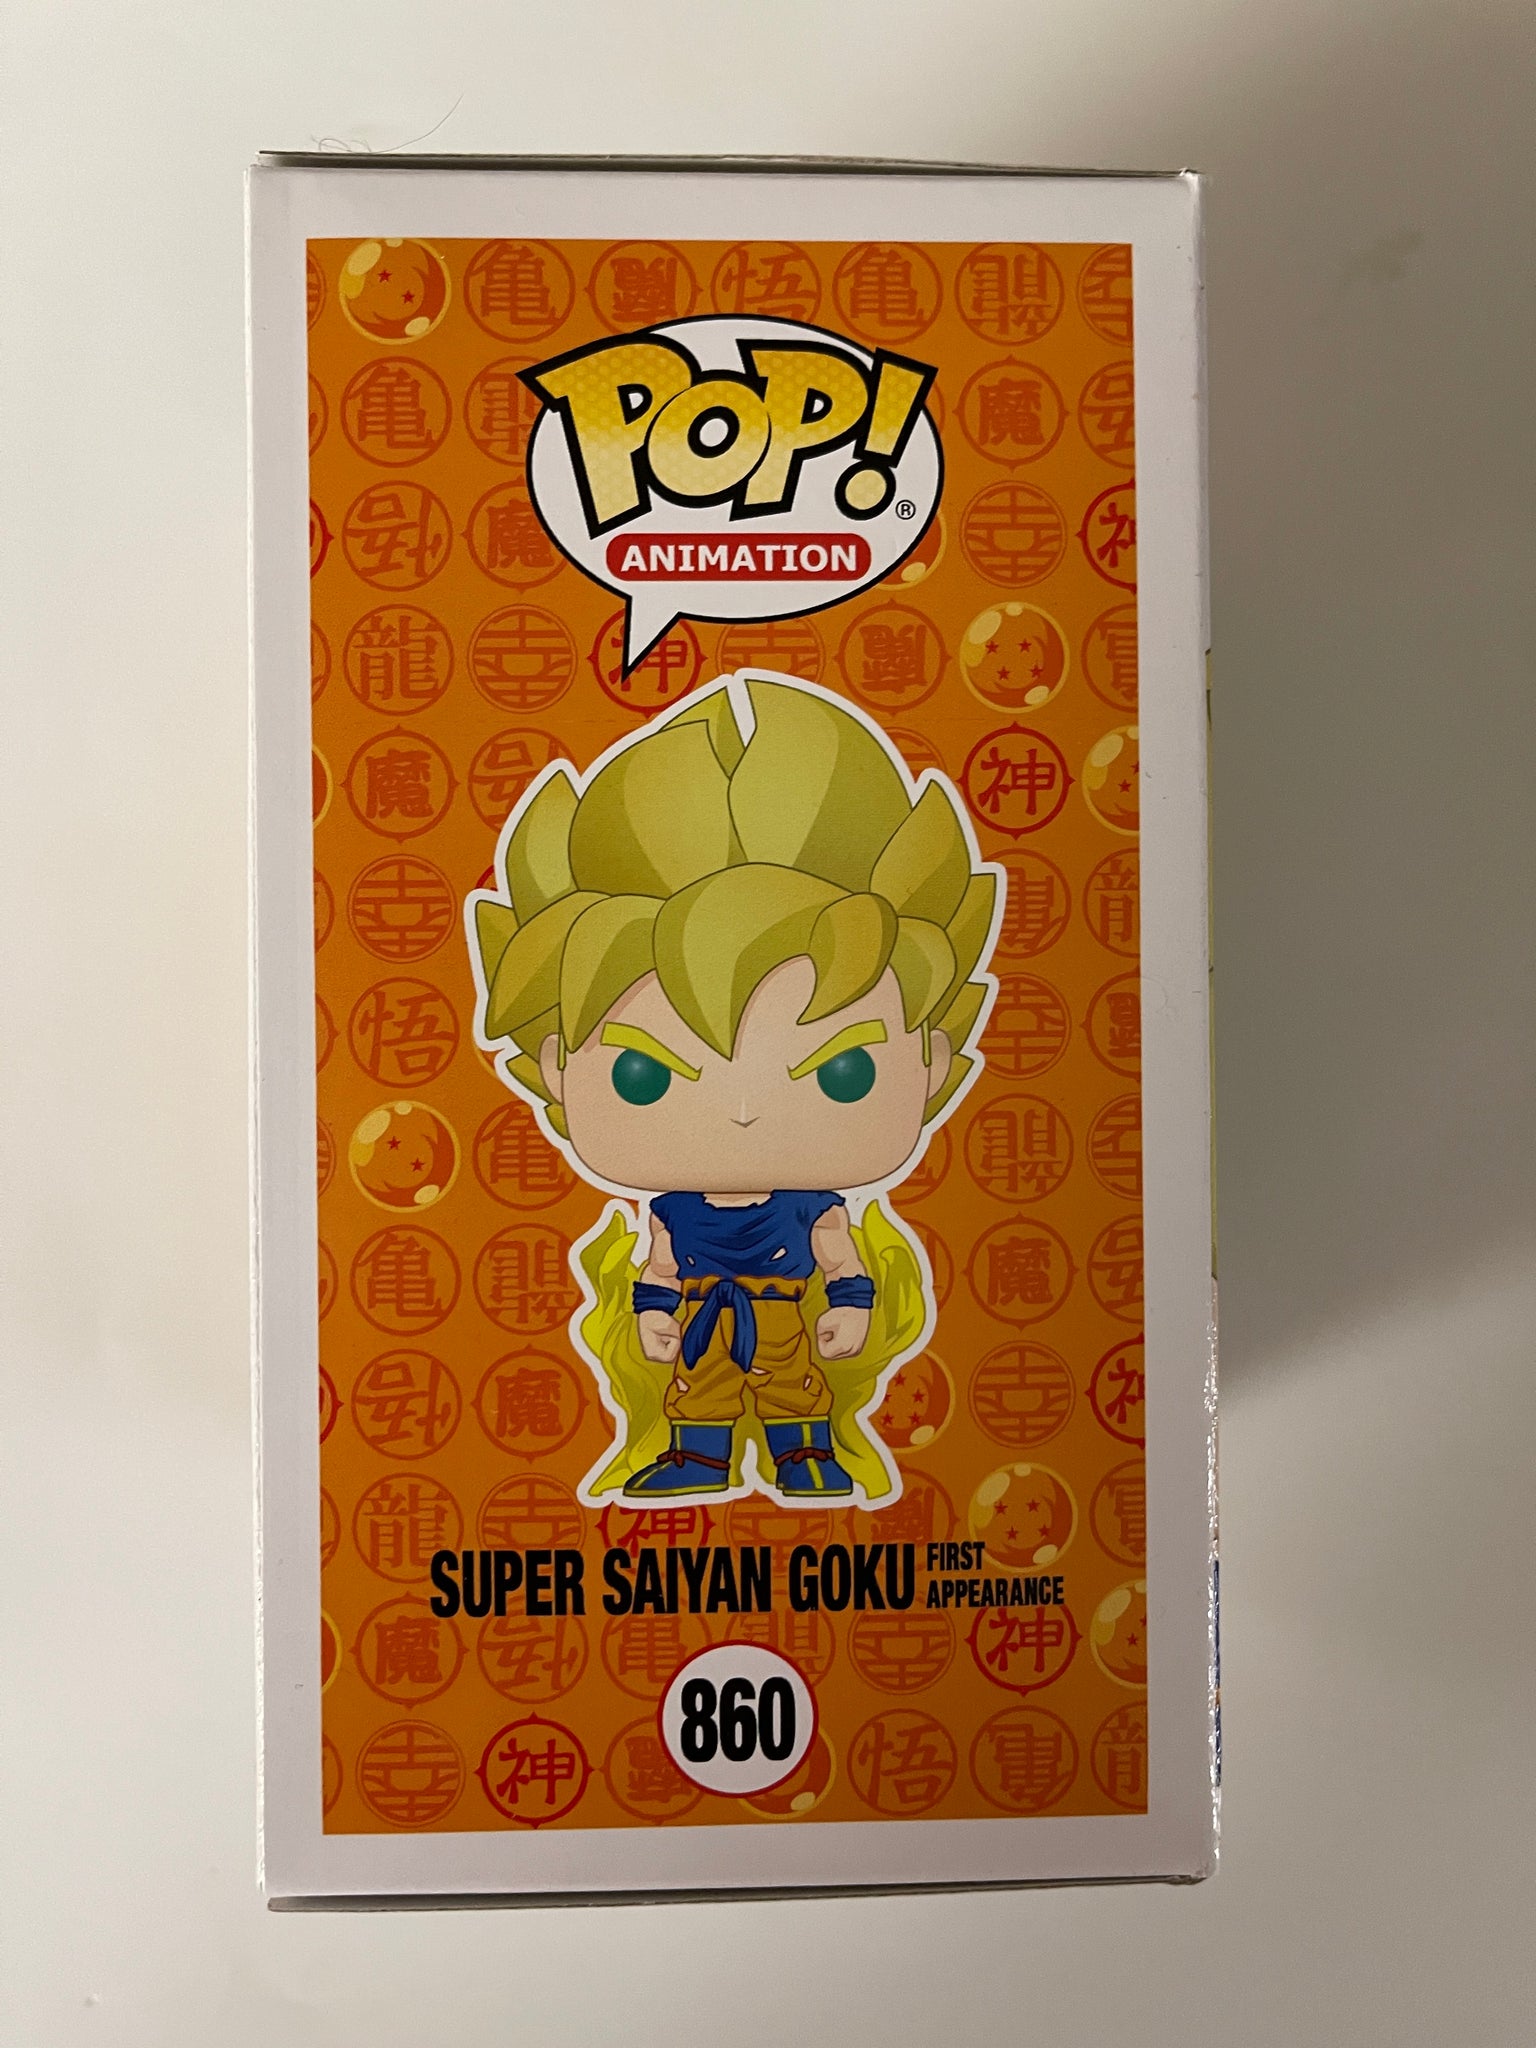 Funko Pop Super Saiyan Goku (Dragon Ball Z) 860